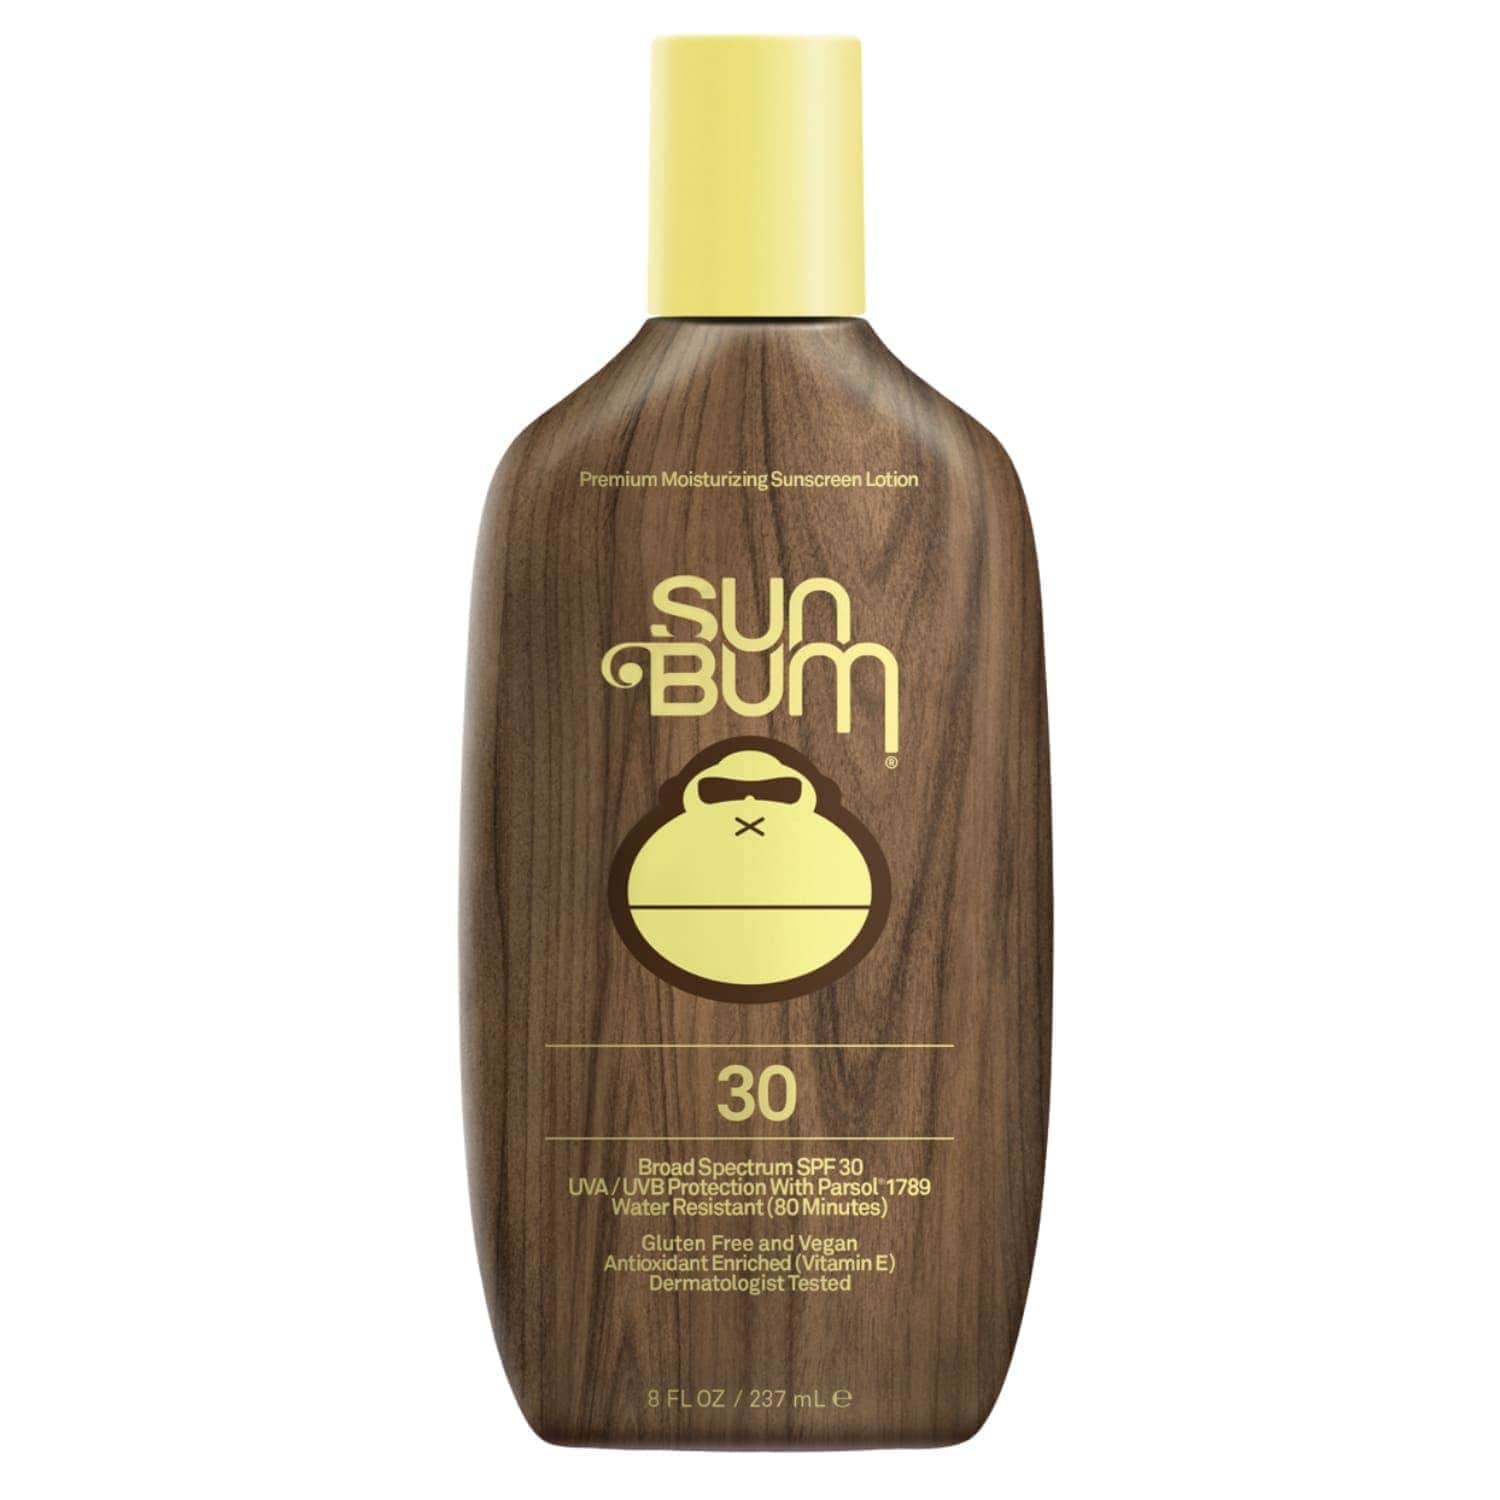 Sun Bum Original SPF 30 Sunscreen Lotion - 237ml - Sunscreen by Sun Bum 237ml